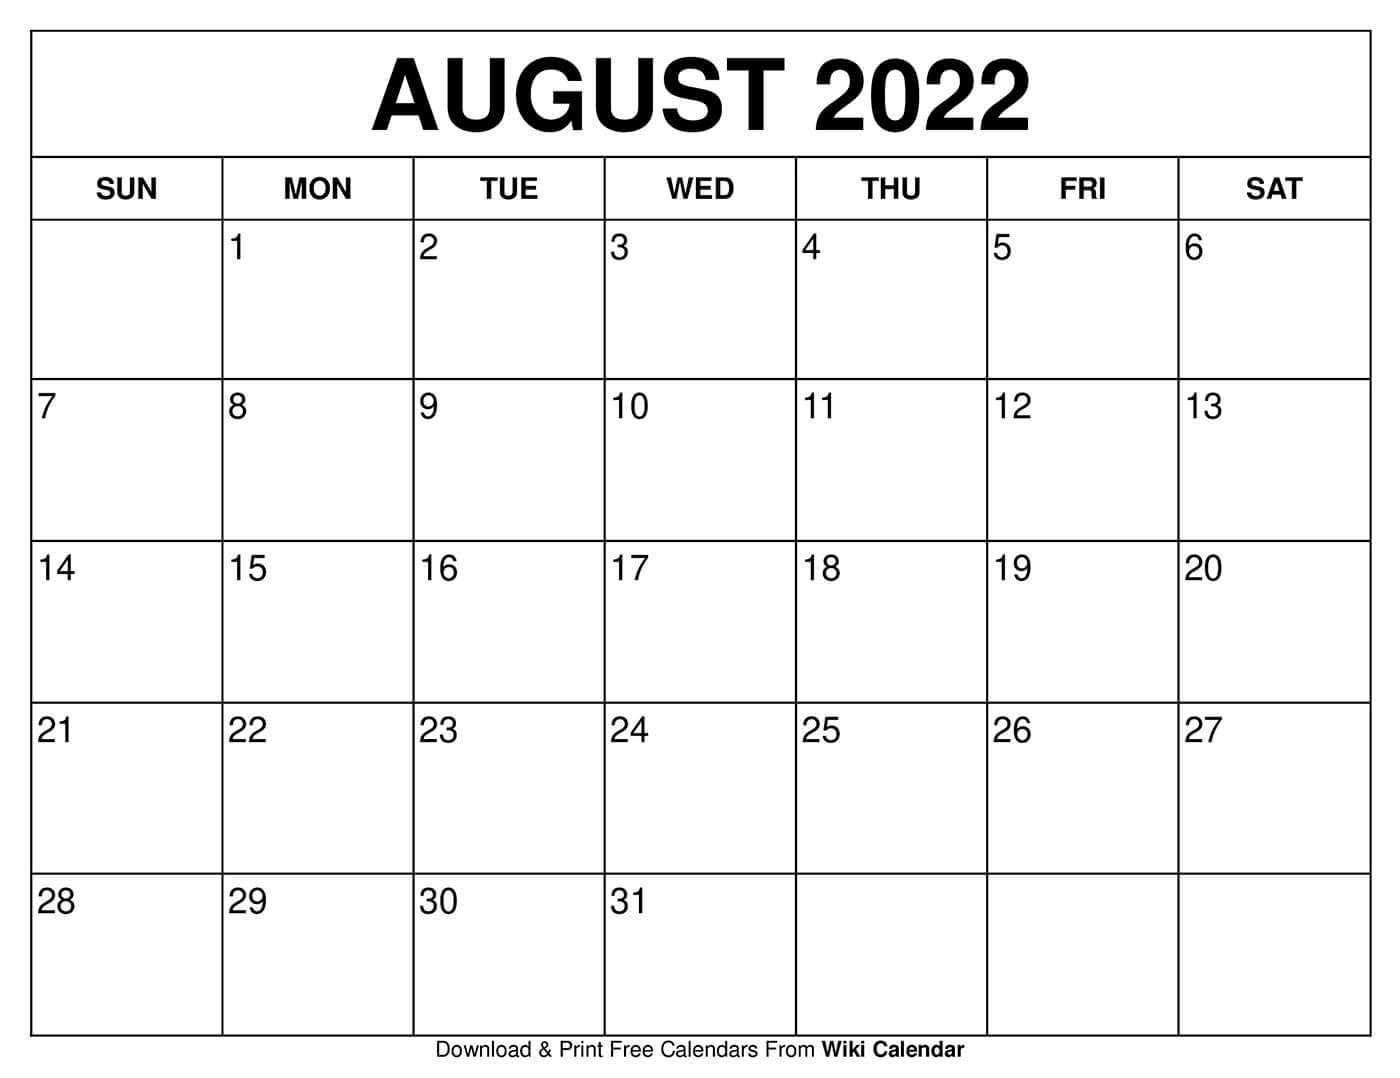 Free Printable August Calendar 2022 Free Printable August 2022 Calendars - Wiki Calendar